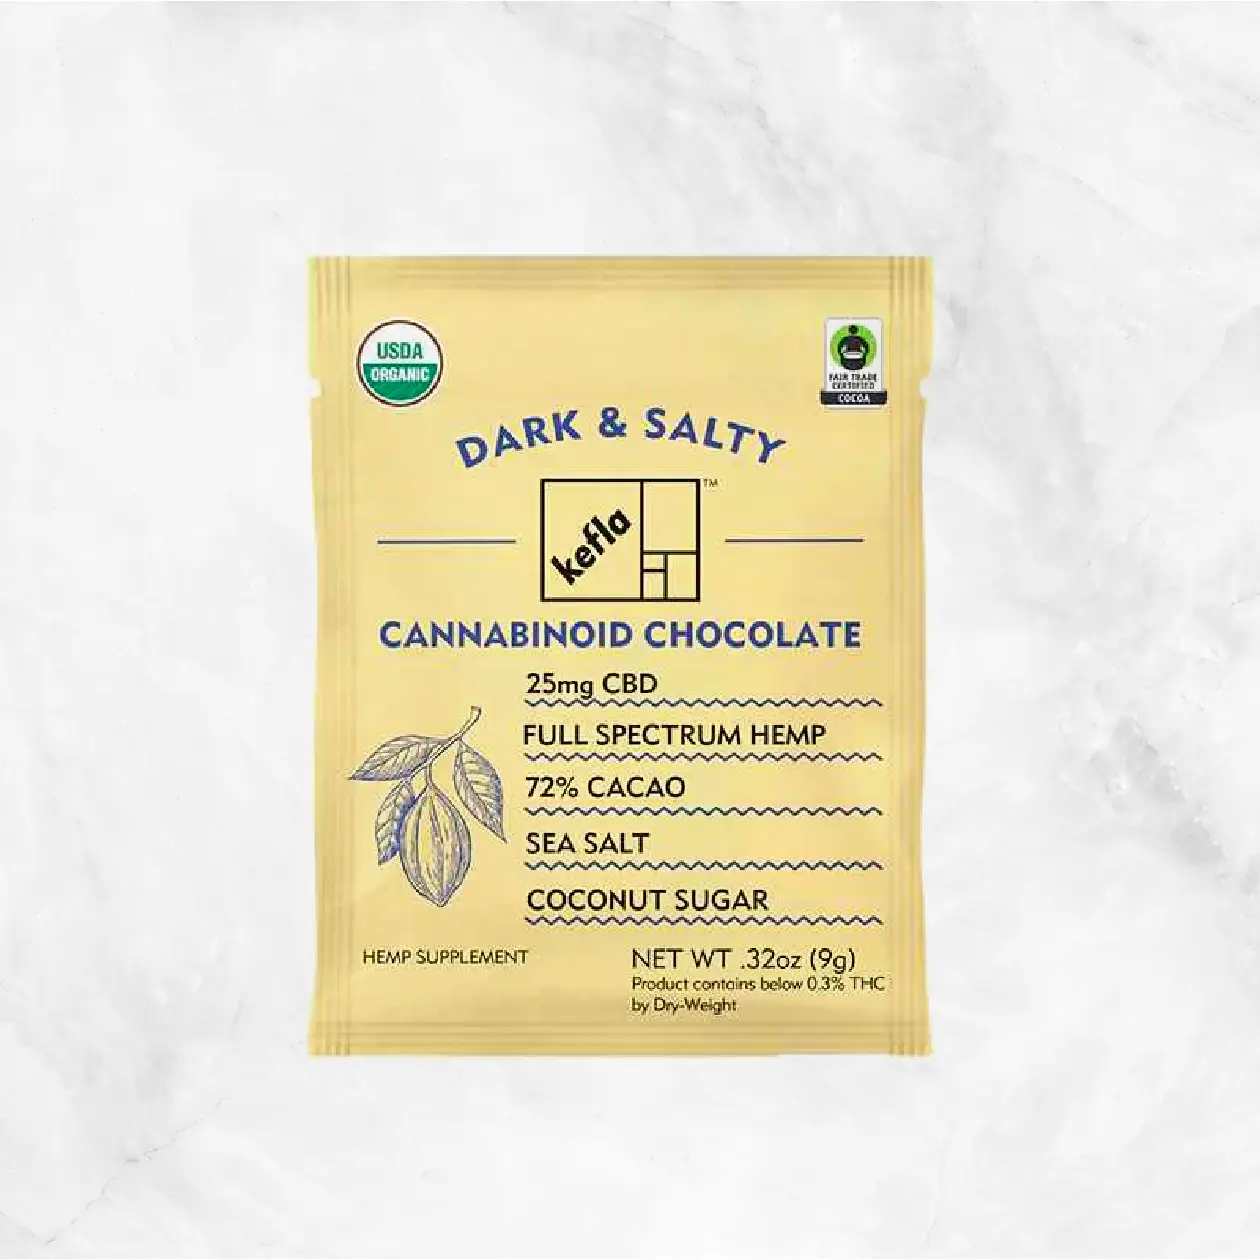 Dark & Salty Cannabinoid Chocolate